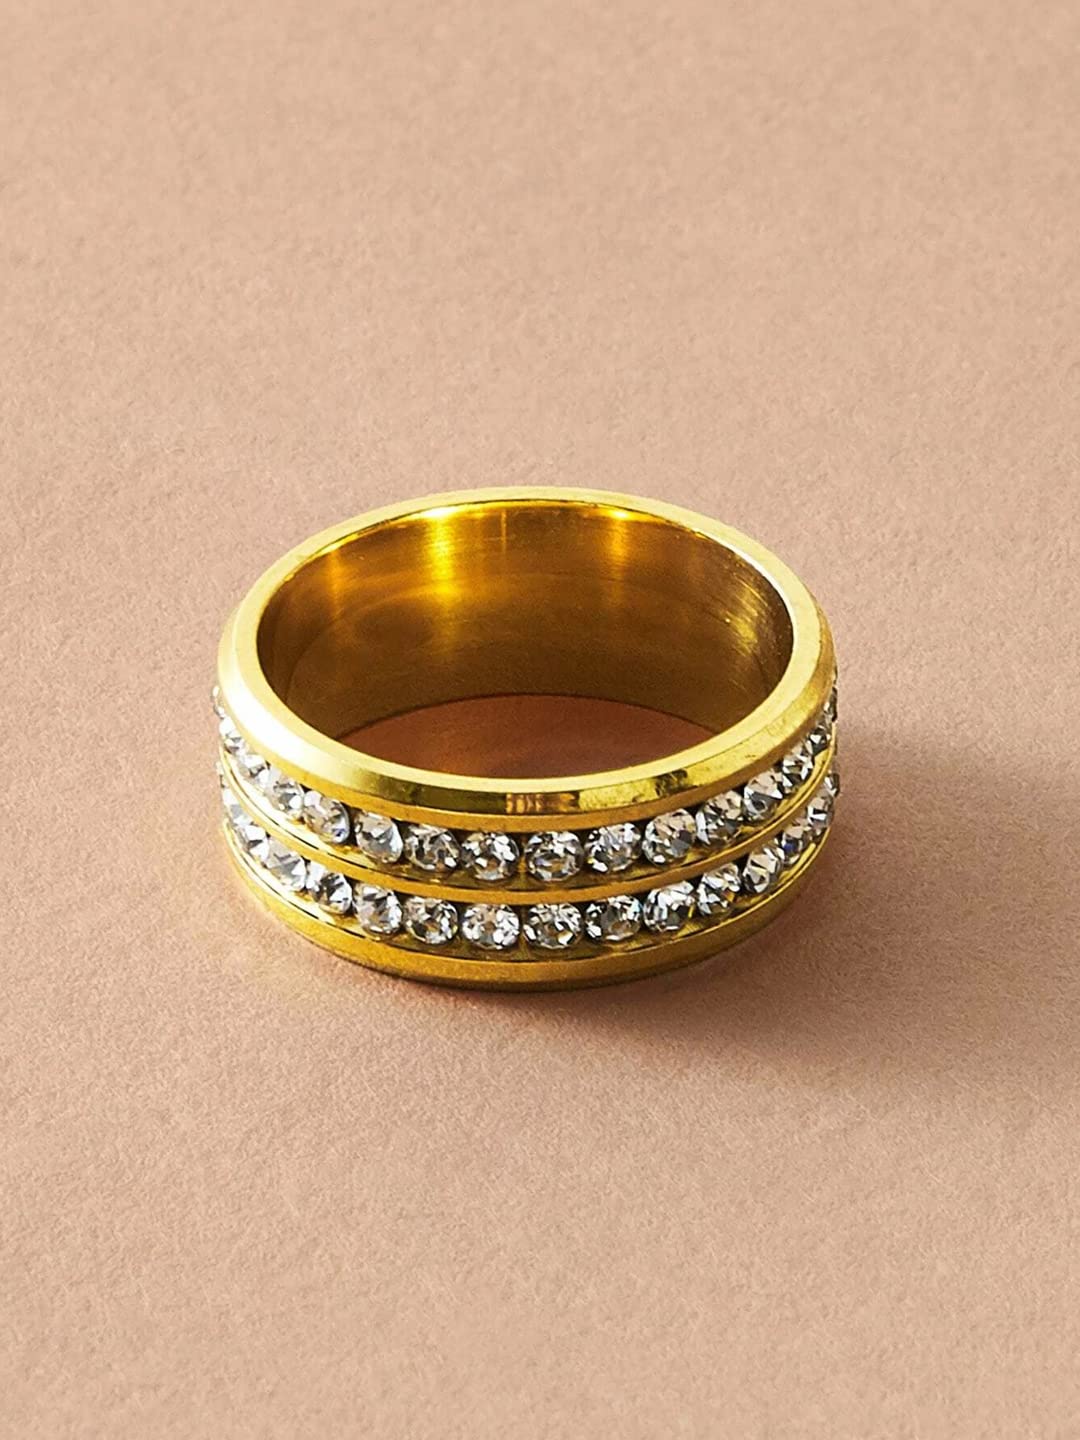 Best Men's Ring Ideas to Gift Him on His Birthday - Diamondere Blog